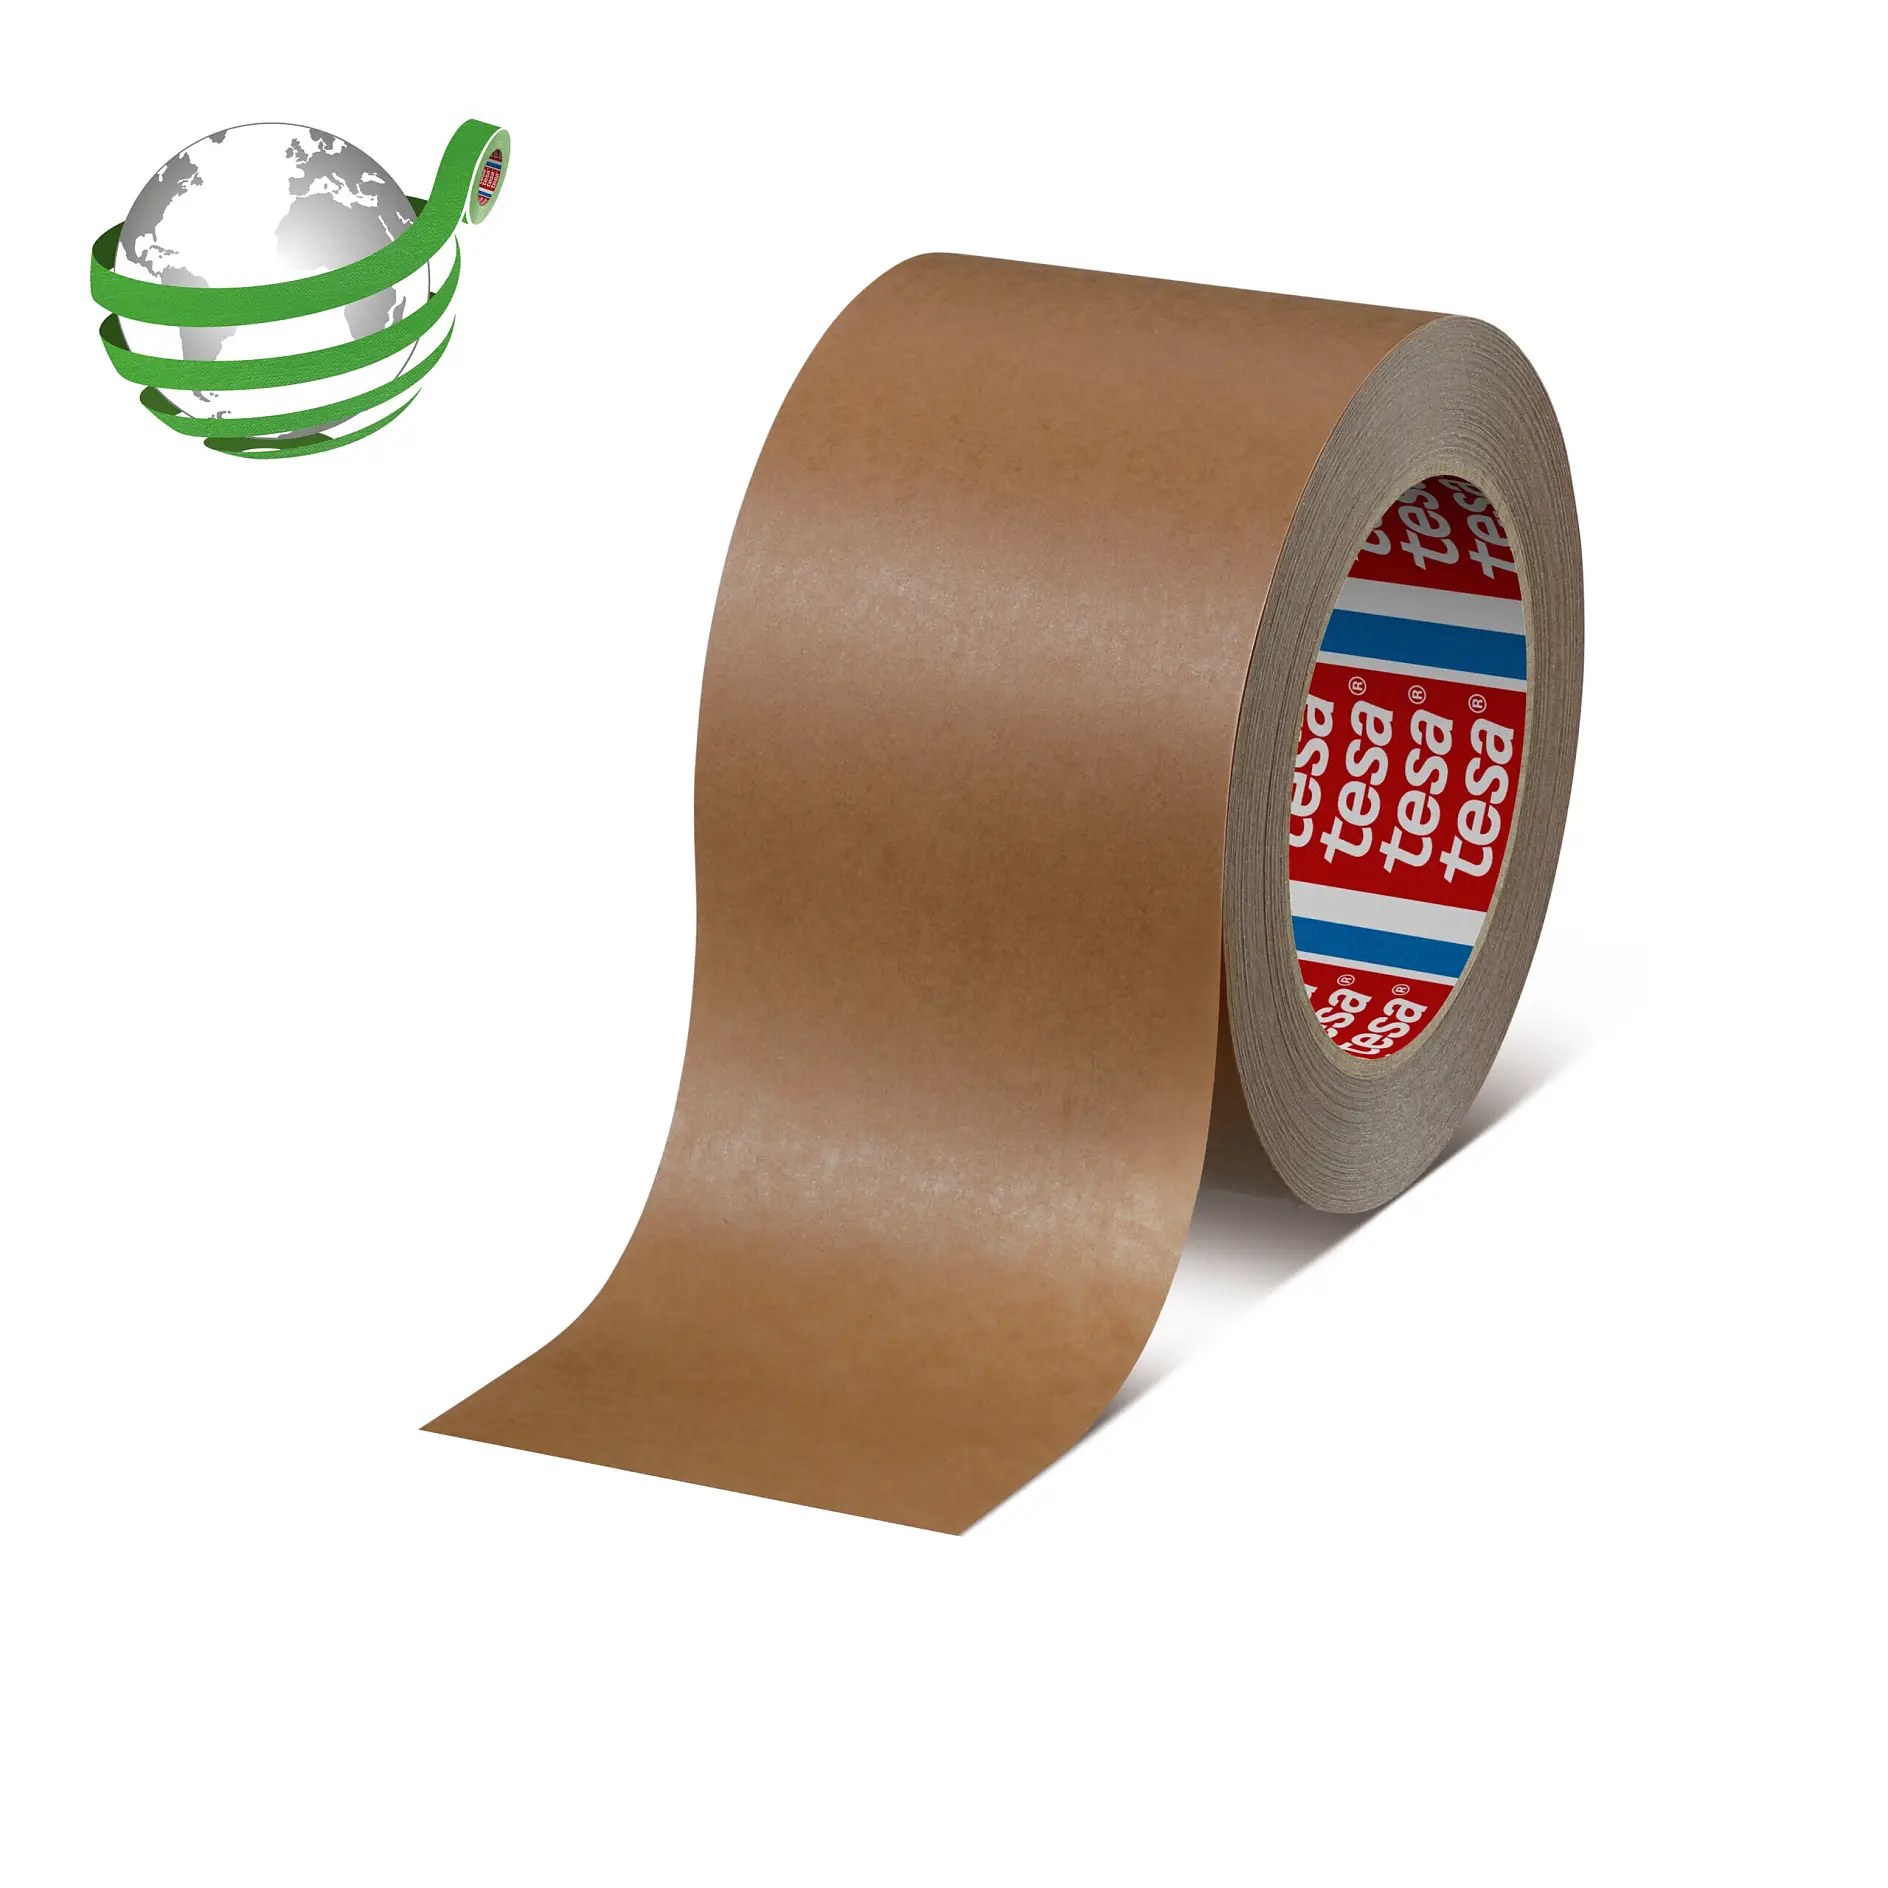 tesa-4313-pv2-paper-carton-sealing-tape-chamois-043130008002-pr-with-marker